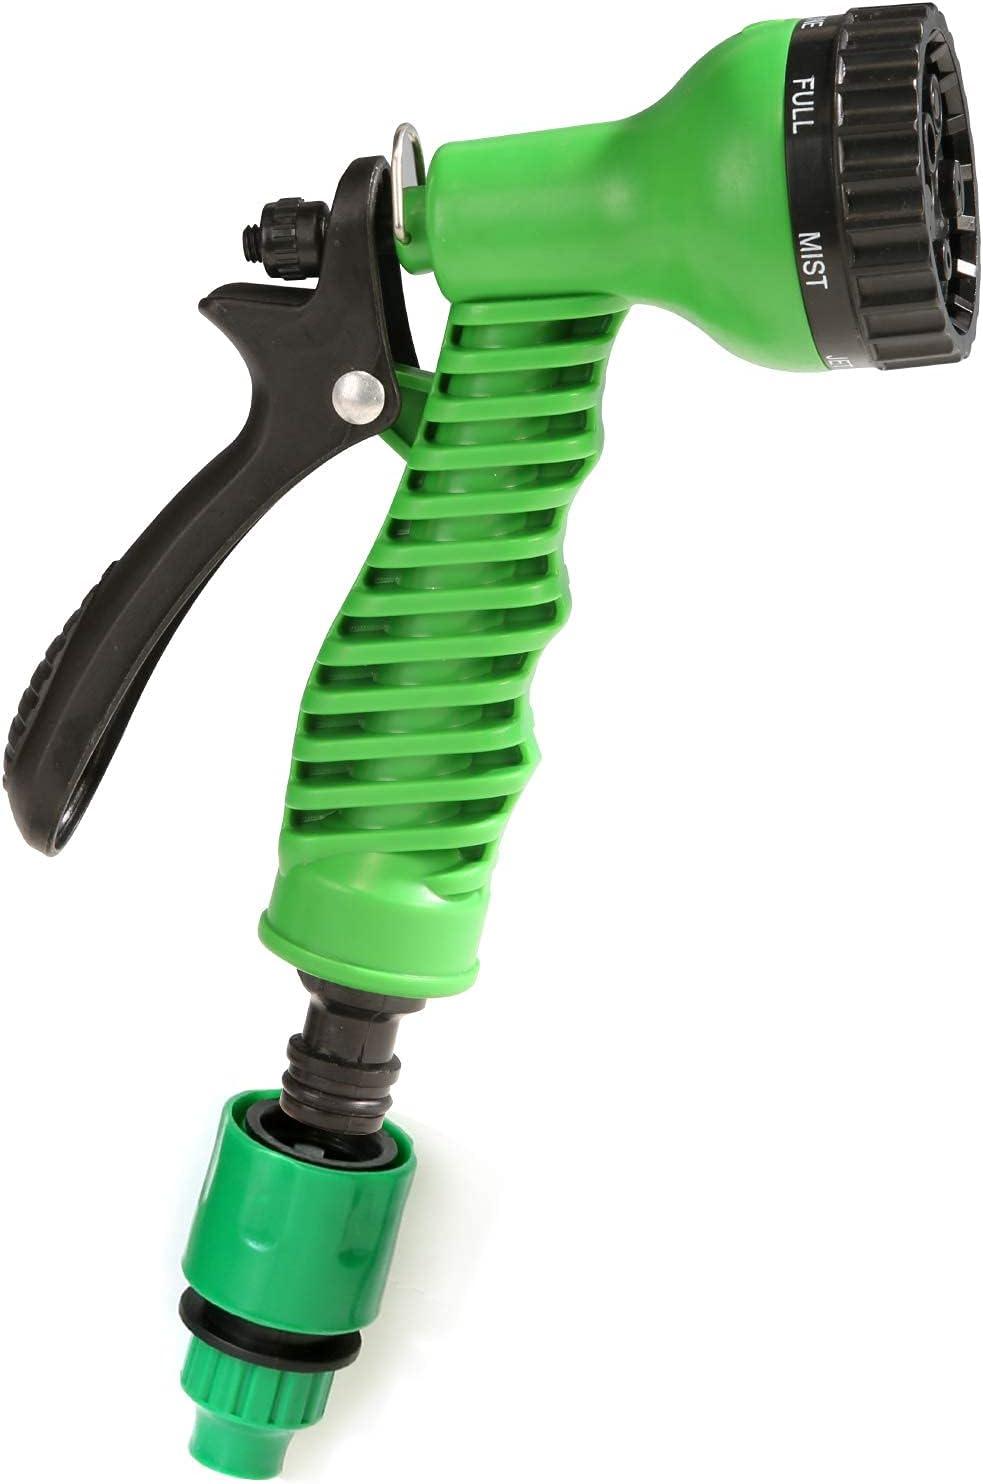 CLICIC Lawn and Garden Portable Sprayer 0.8 Gallon / 3 L - Pump Pressure  Sprayer Includes Shoulder Strap.